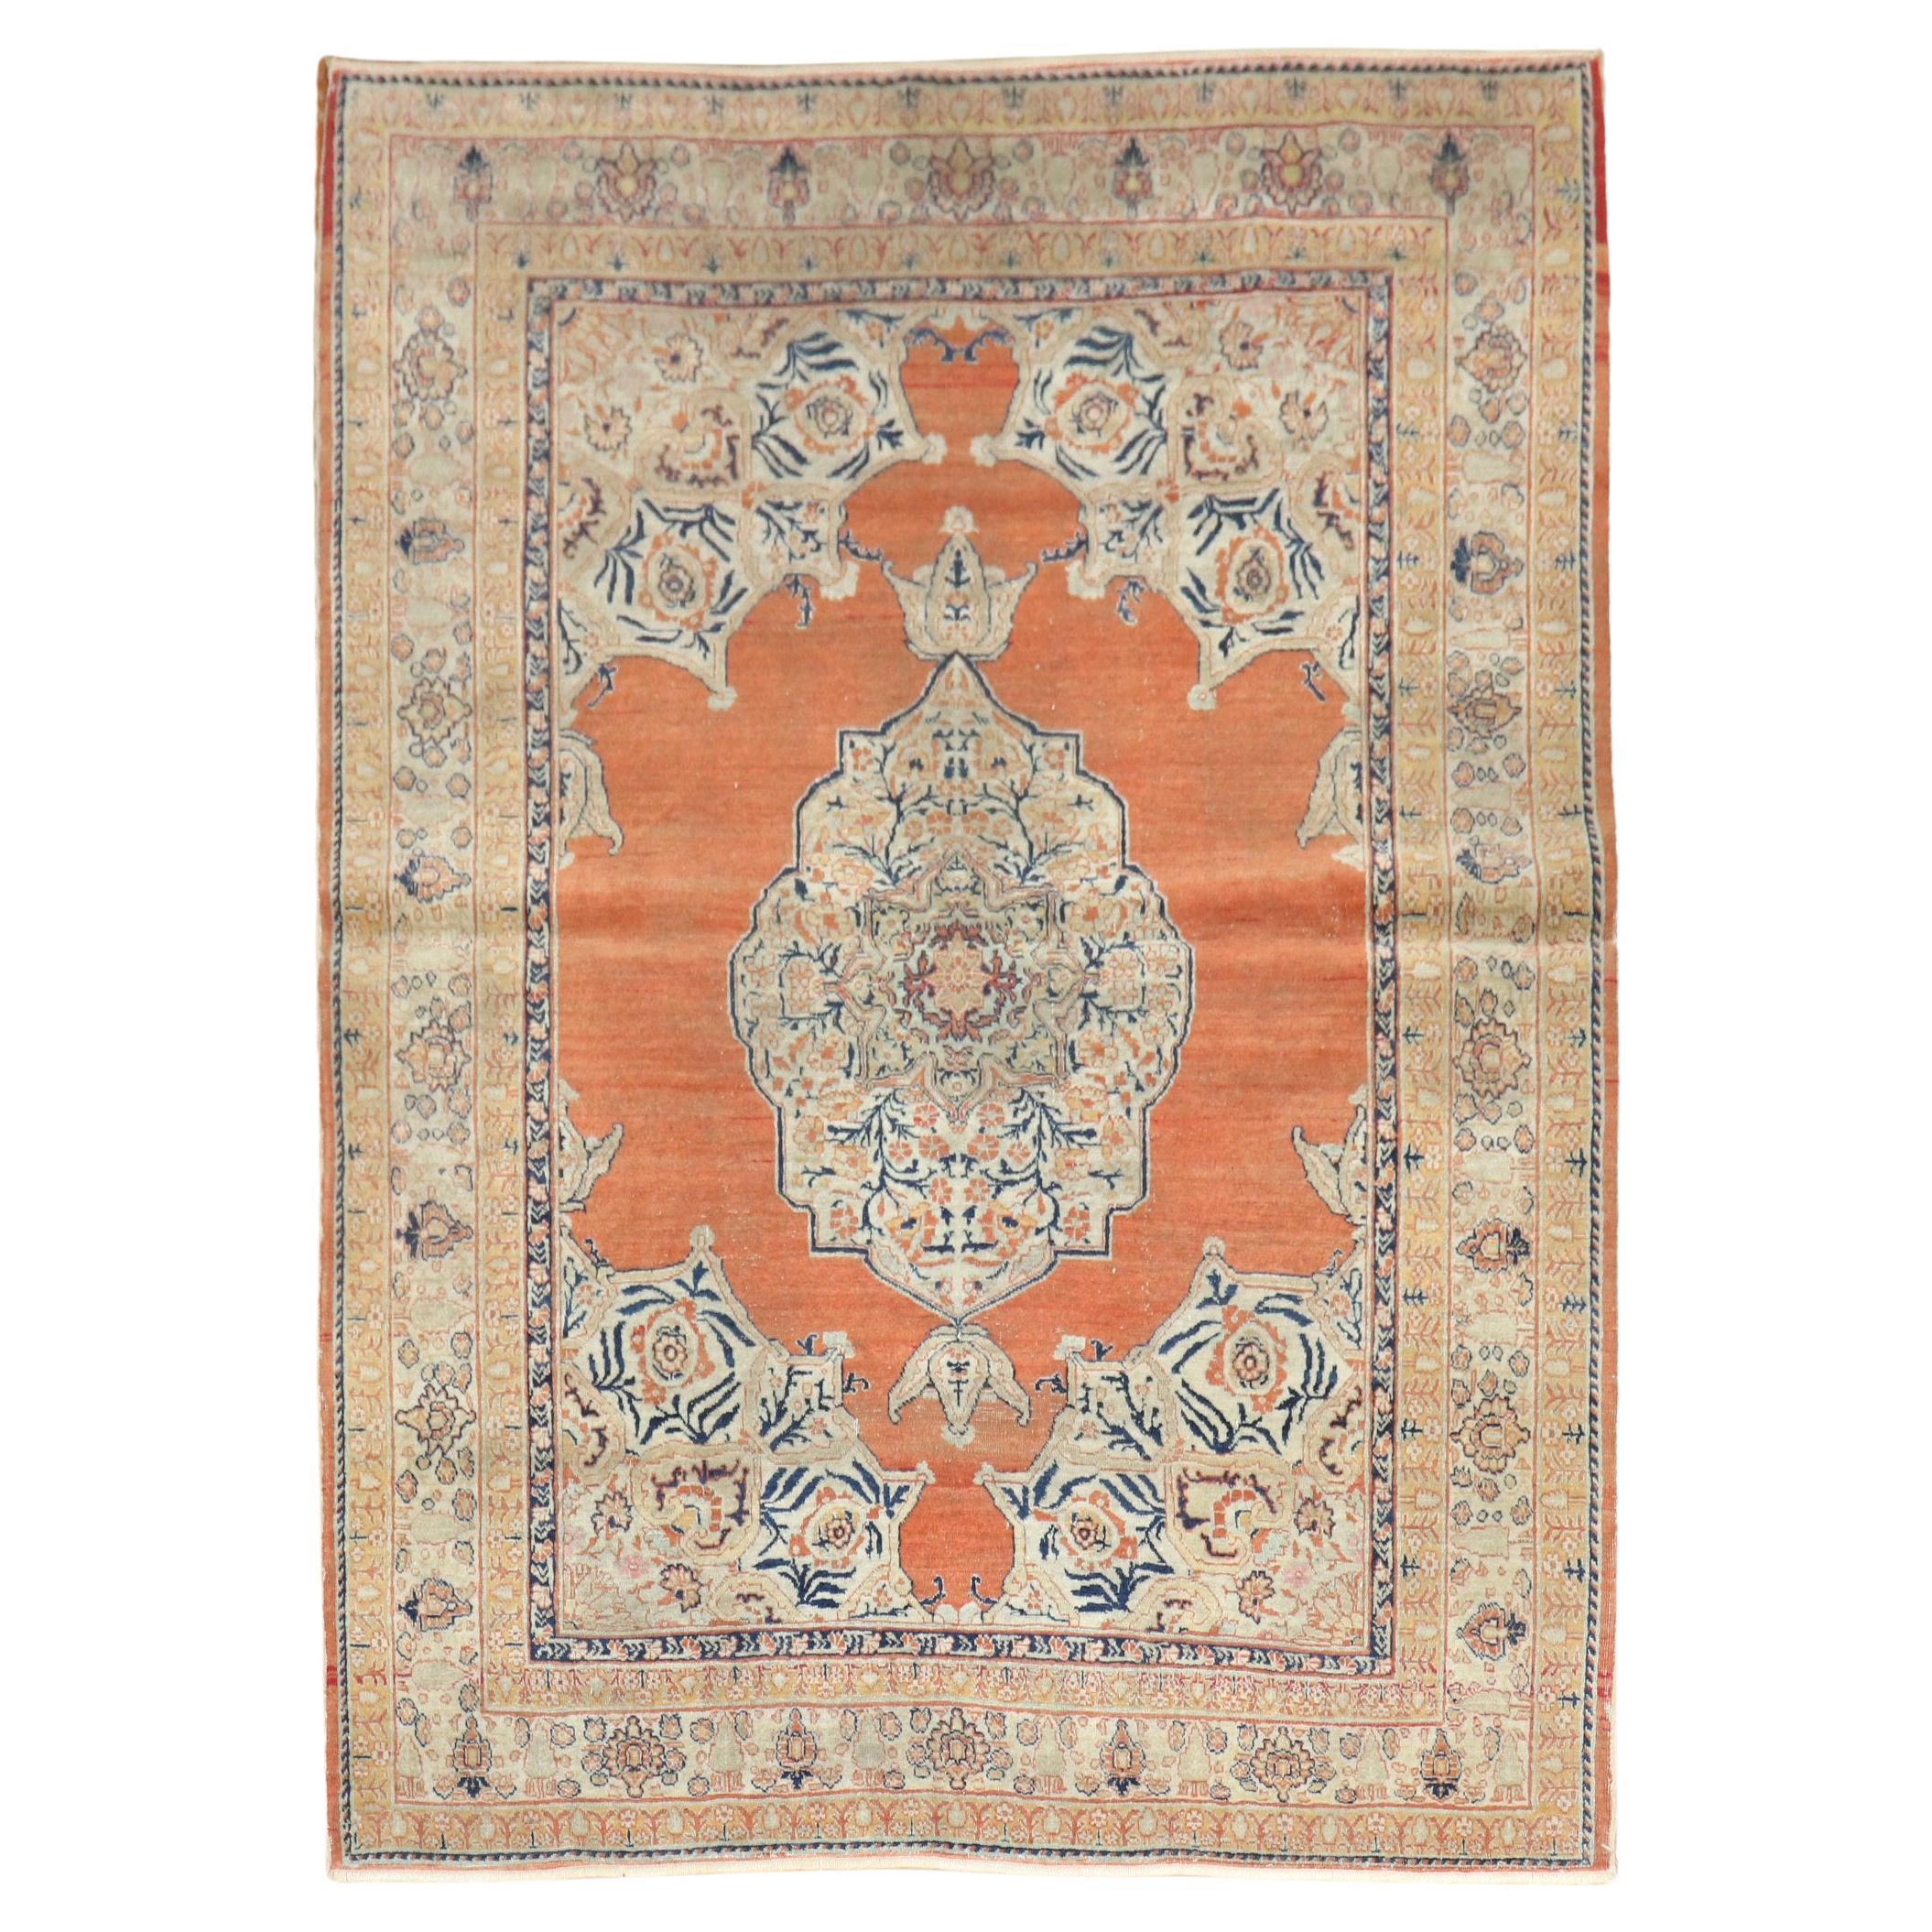 Atemberaubender persischer Hadji Jali Li Täbriz-Teppich aus dem 19. Jahrhundert